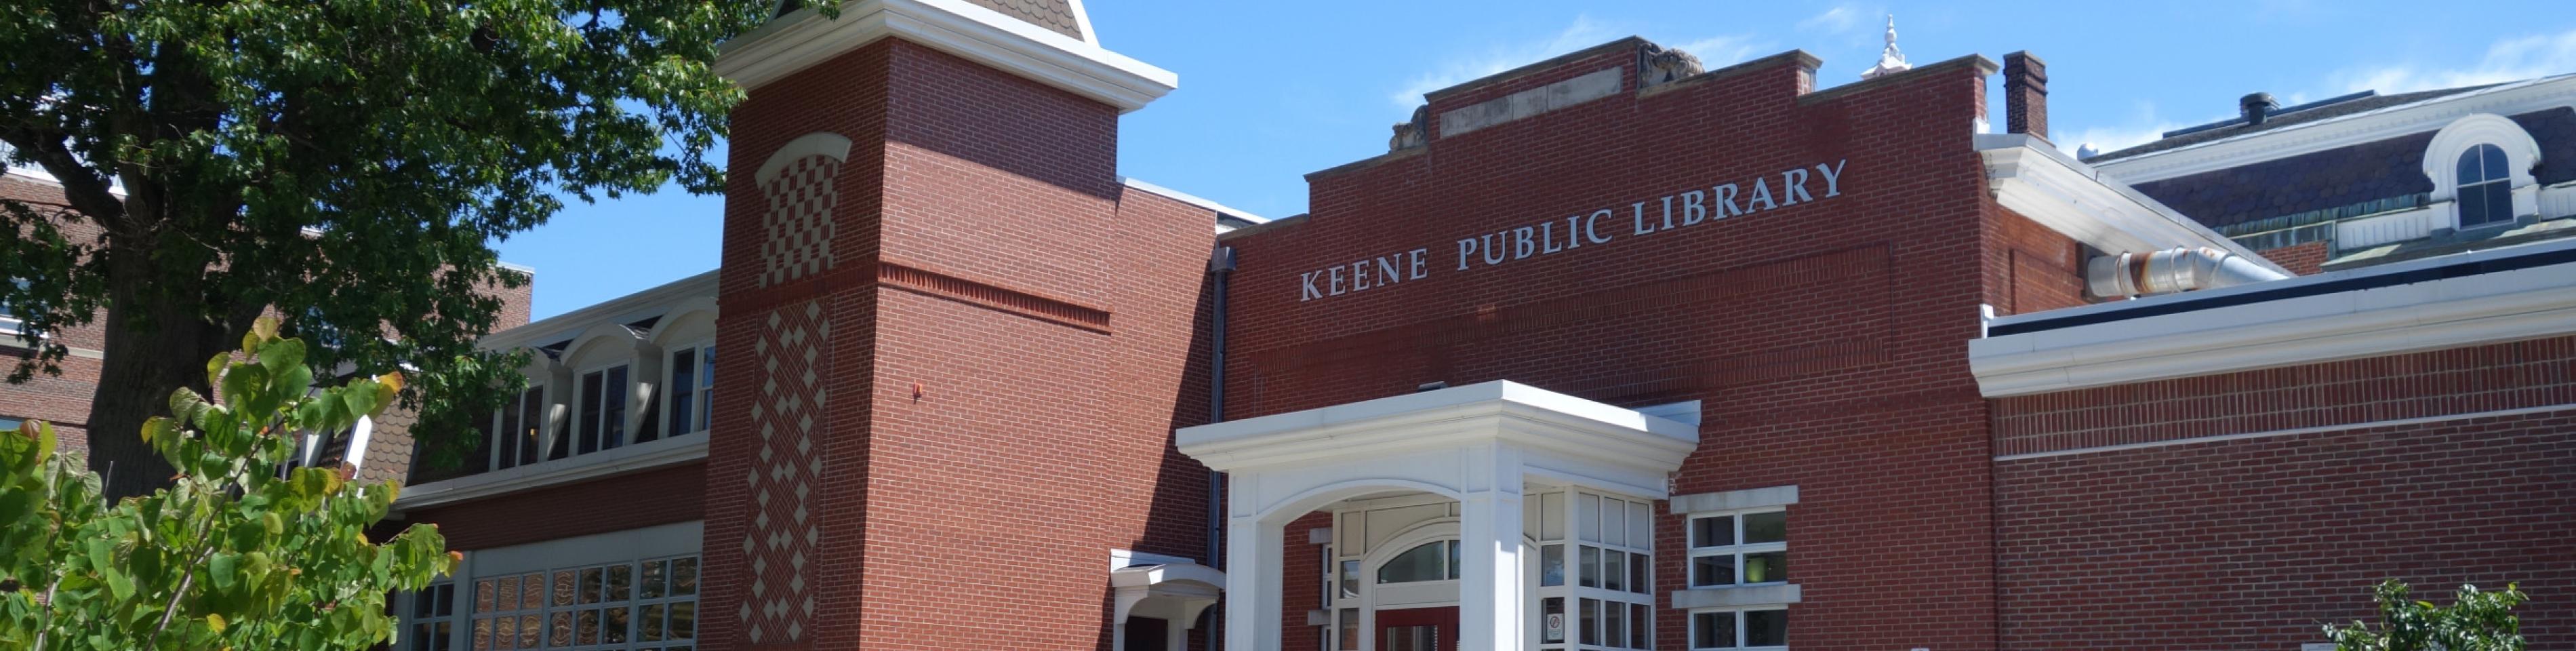 Keene Public Library exterior